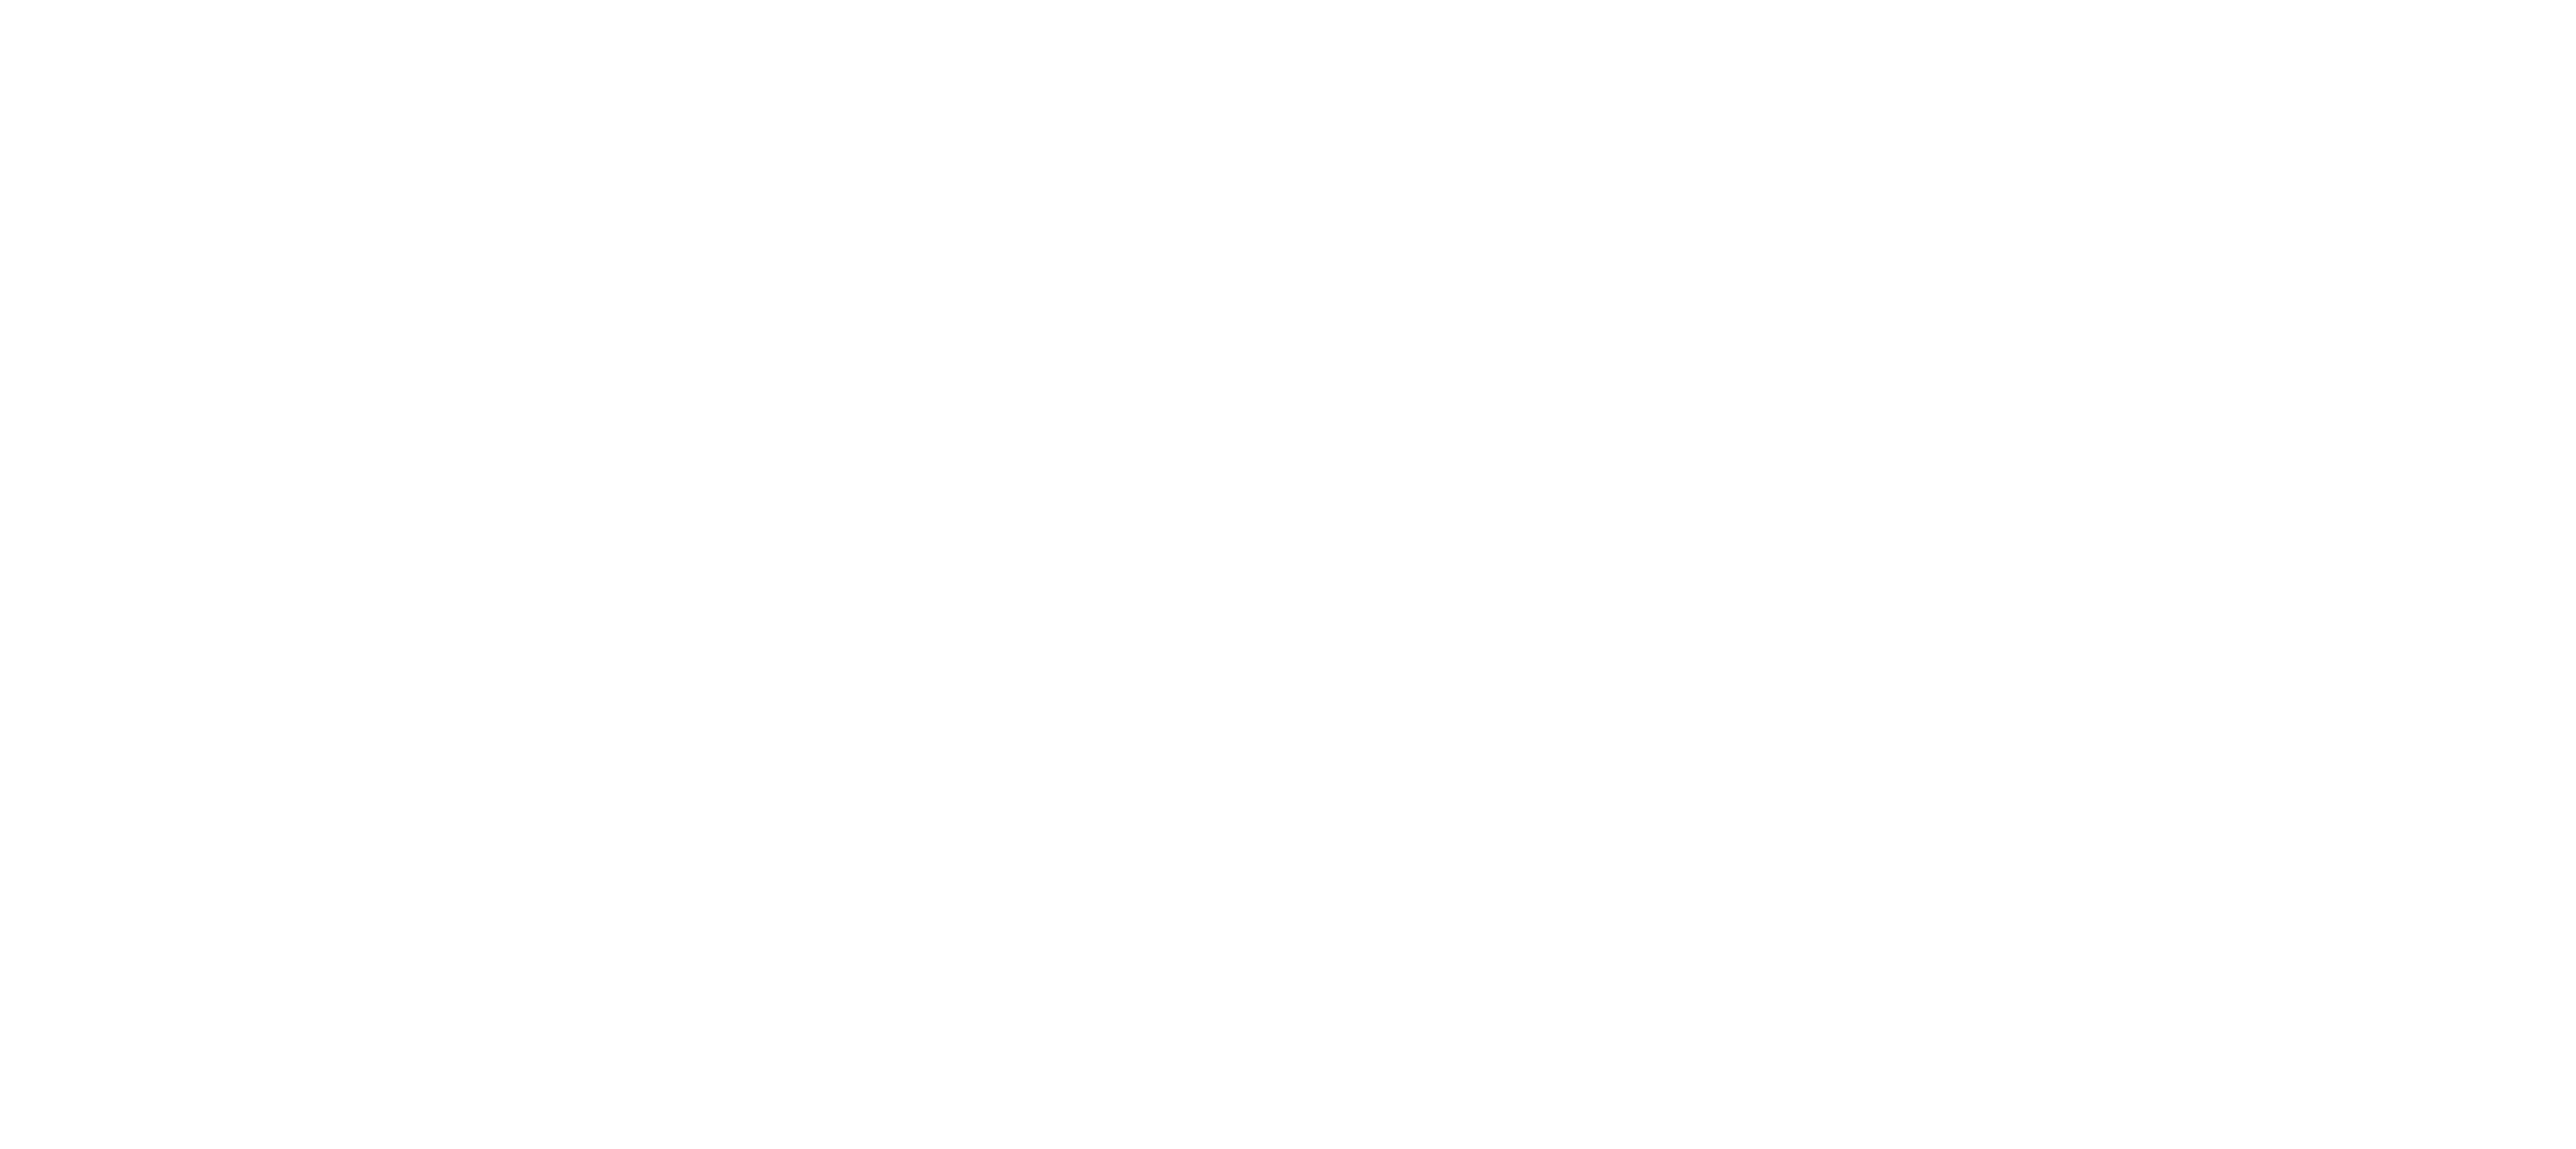 Dancing Man Company Logo - SwayD